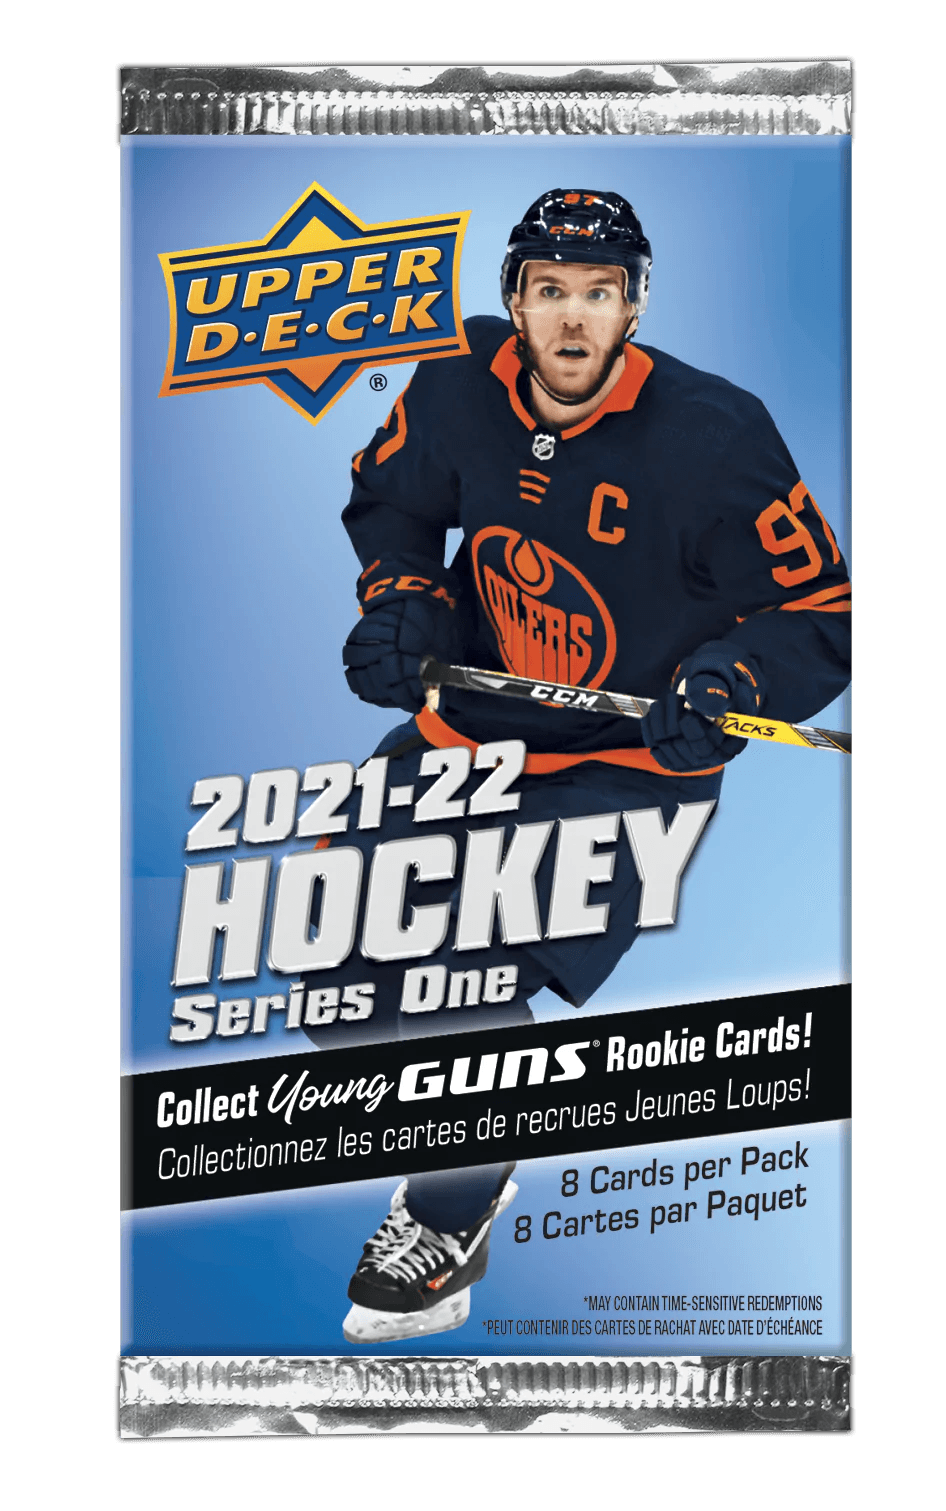 Hockey - 2021/22 - Upper Deck Series 1 - Blaster Box (6 Packs) - Hobby Champion Inc